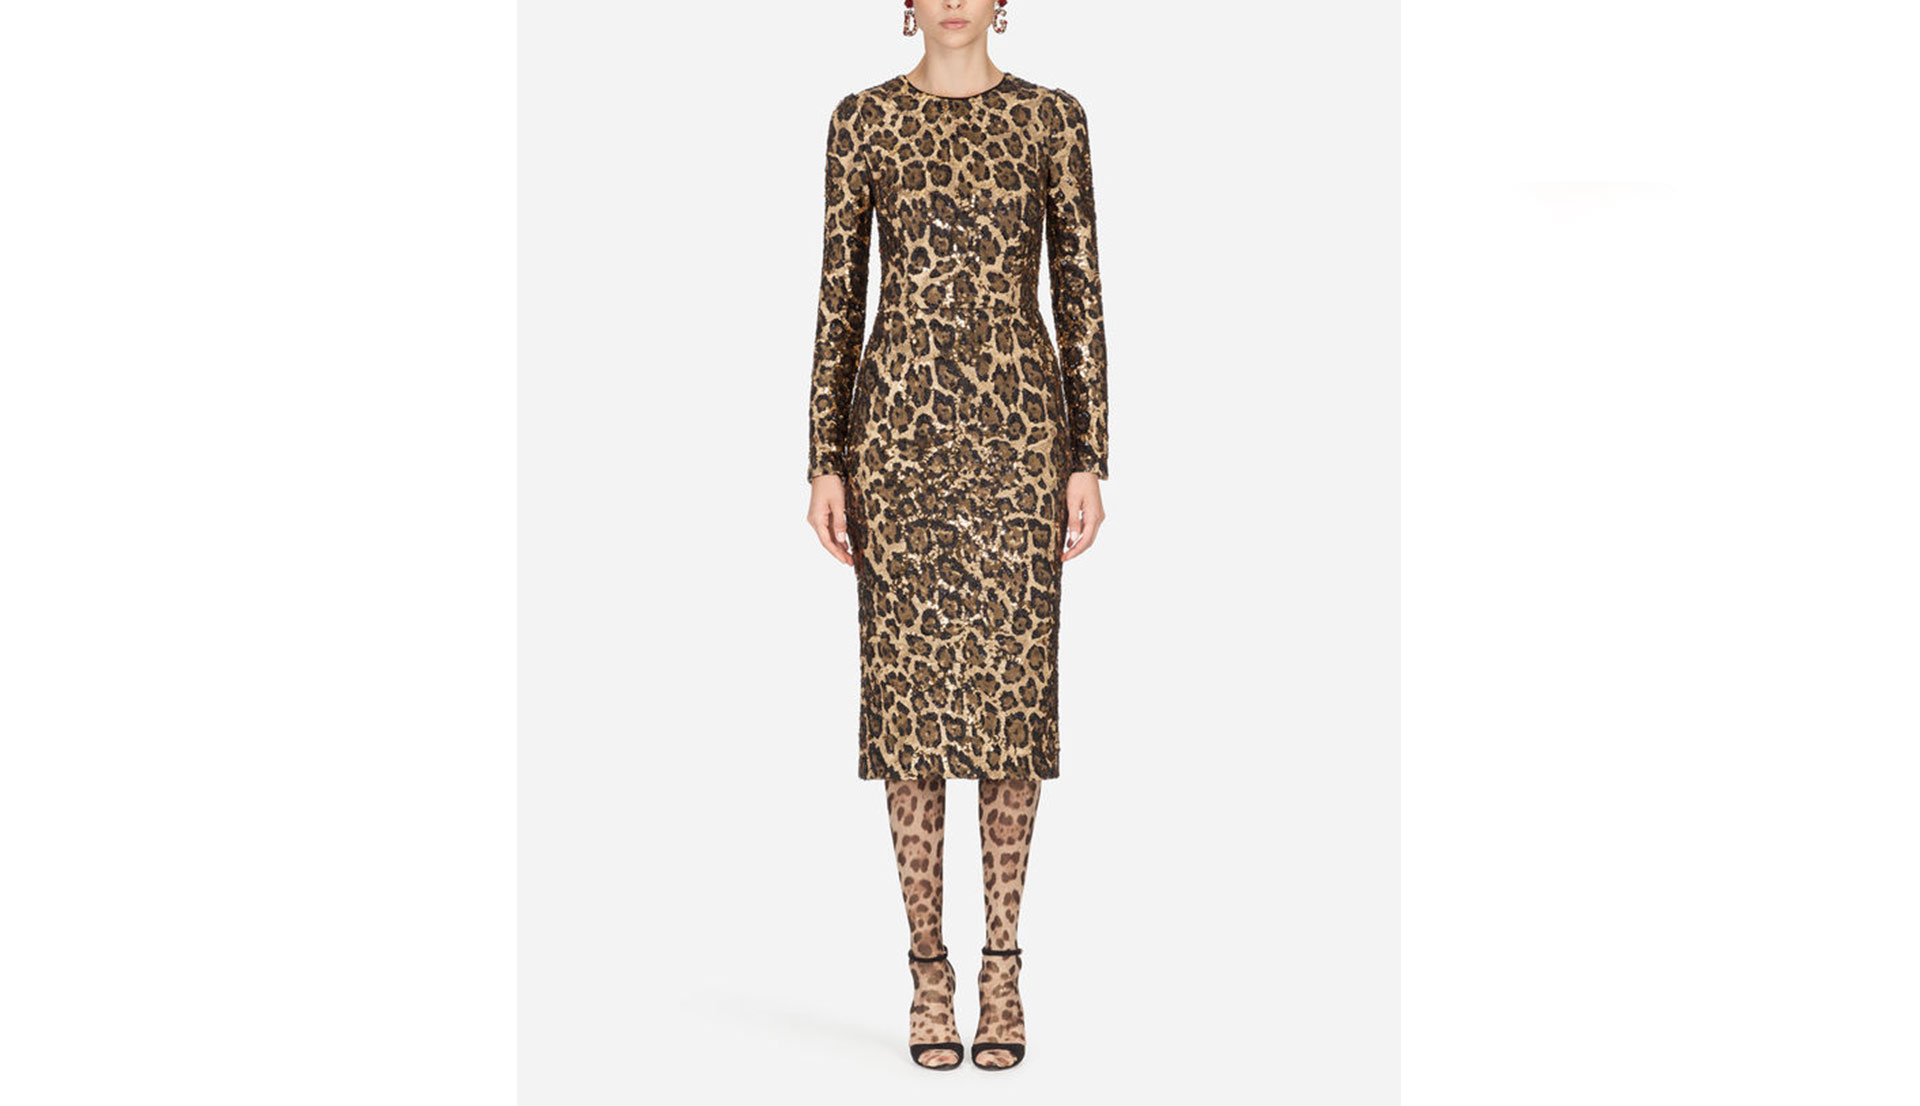 Dolce & Gabbana’s sequin leopard midi-length sheath